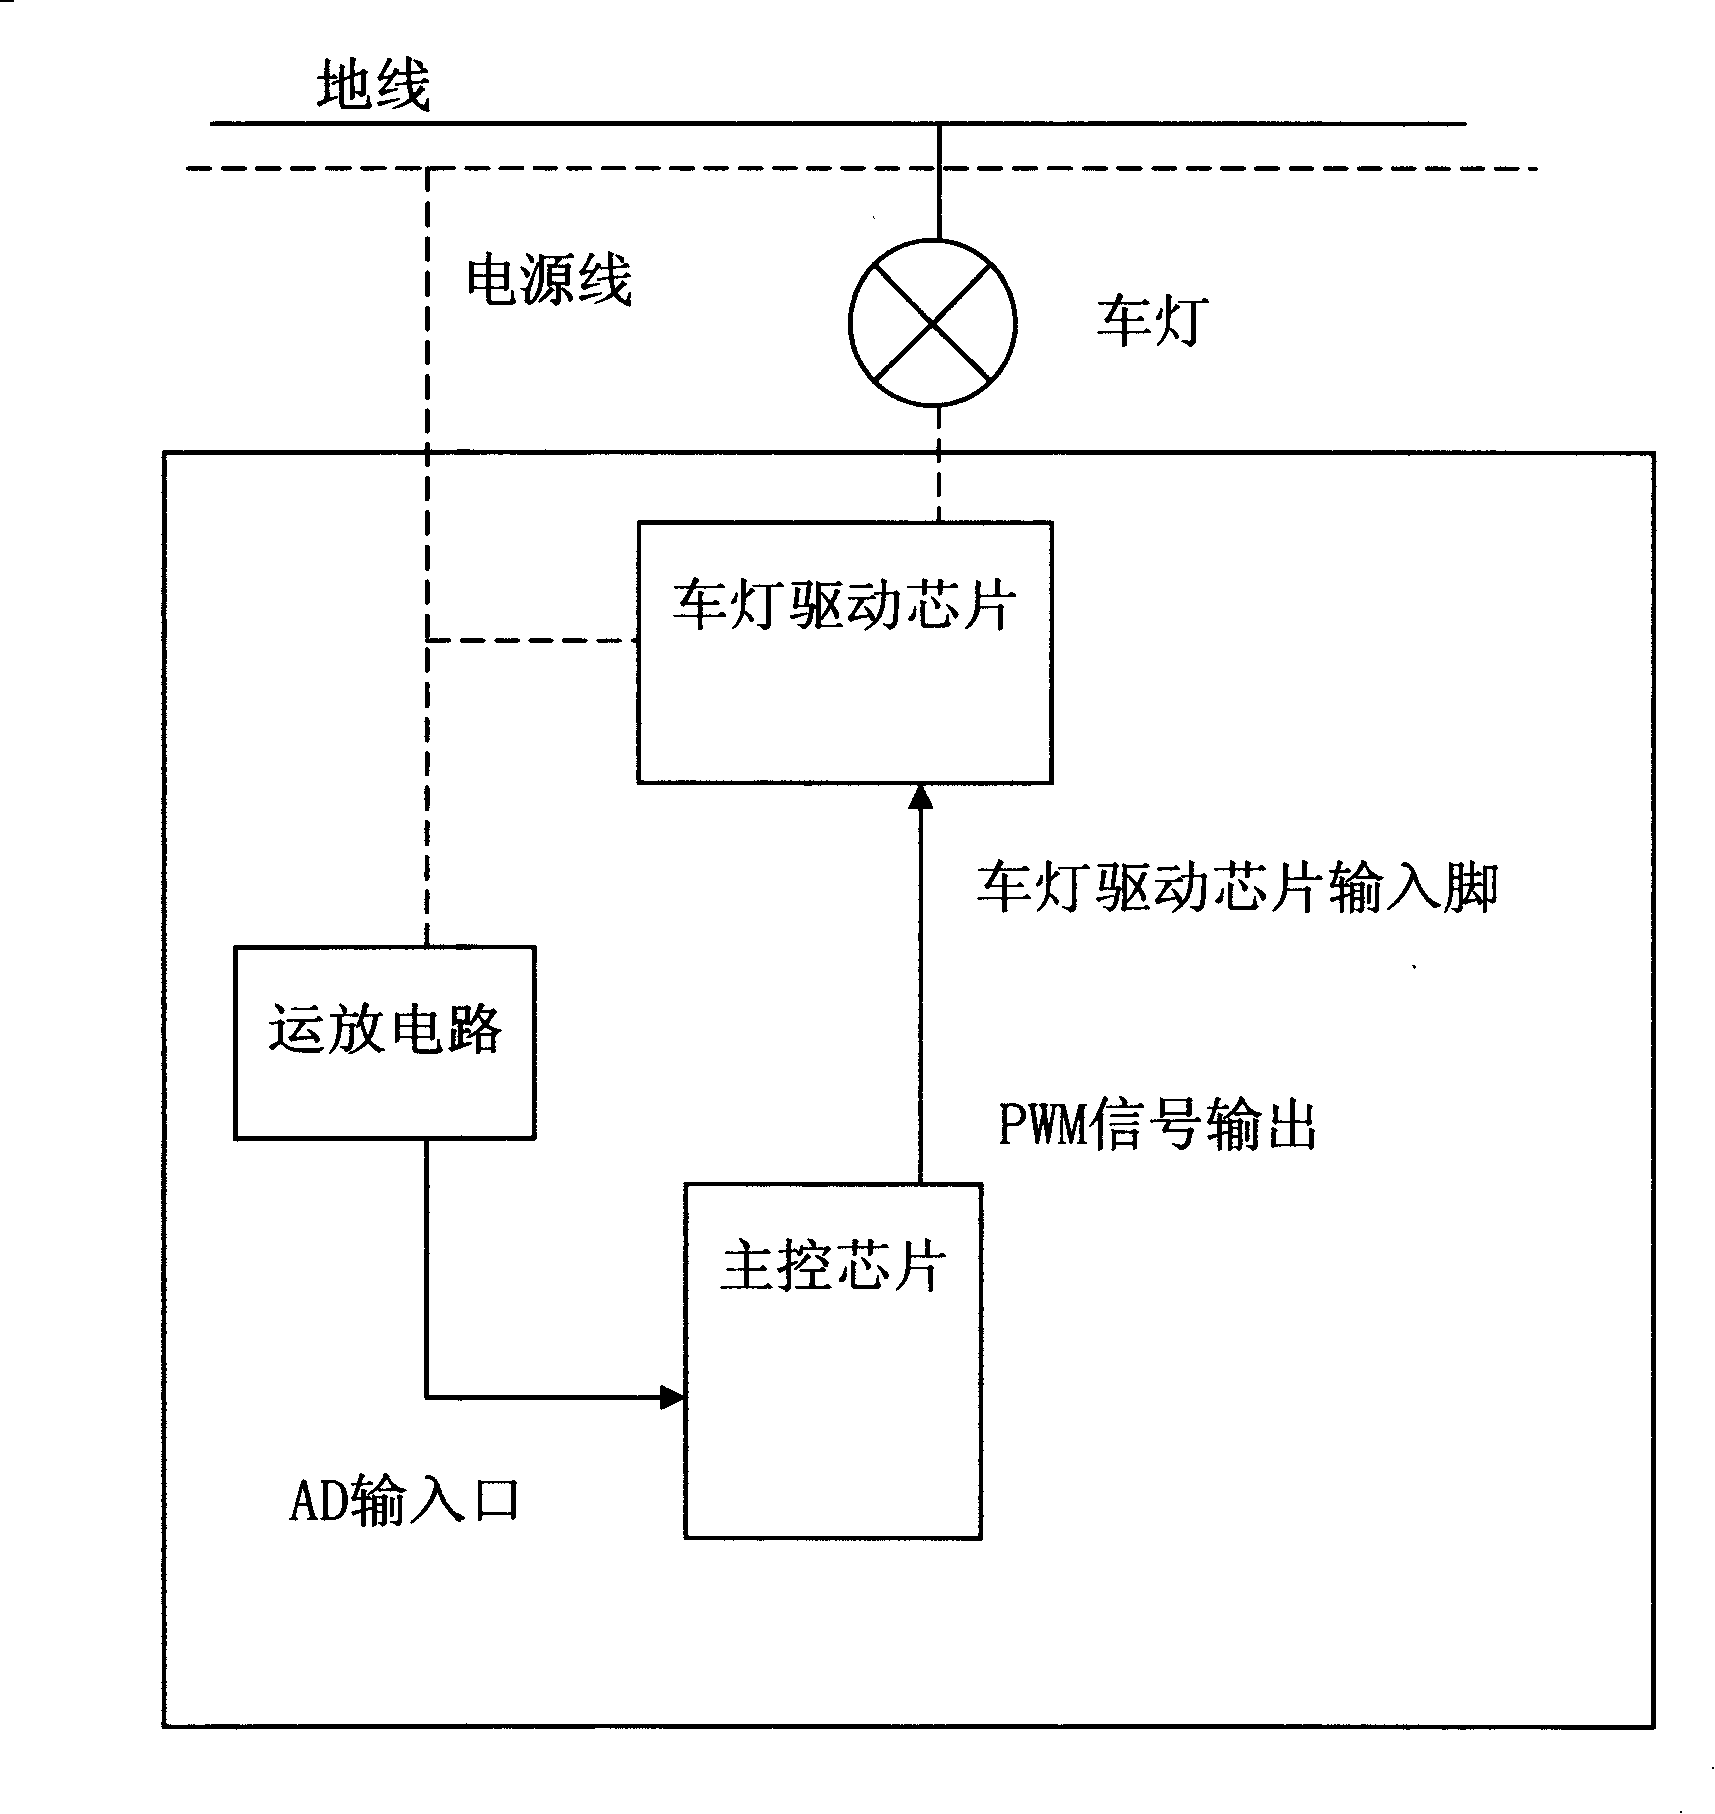 Car lamp control method and control circuit